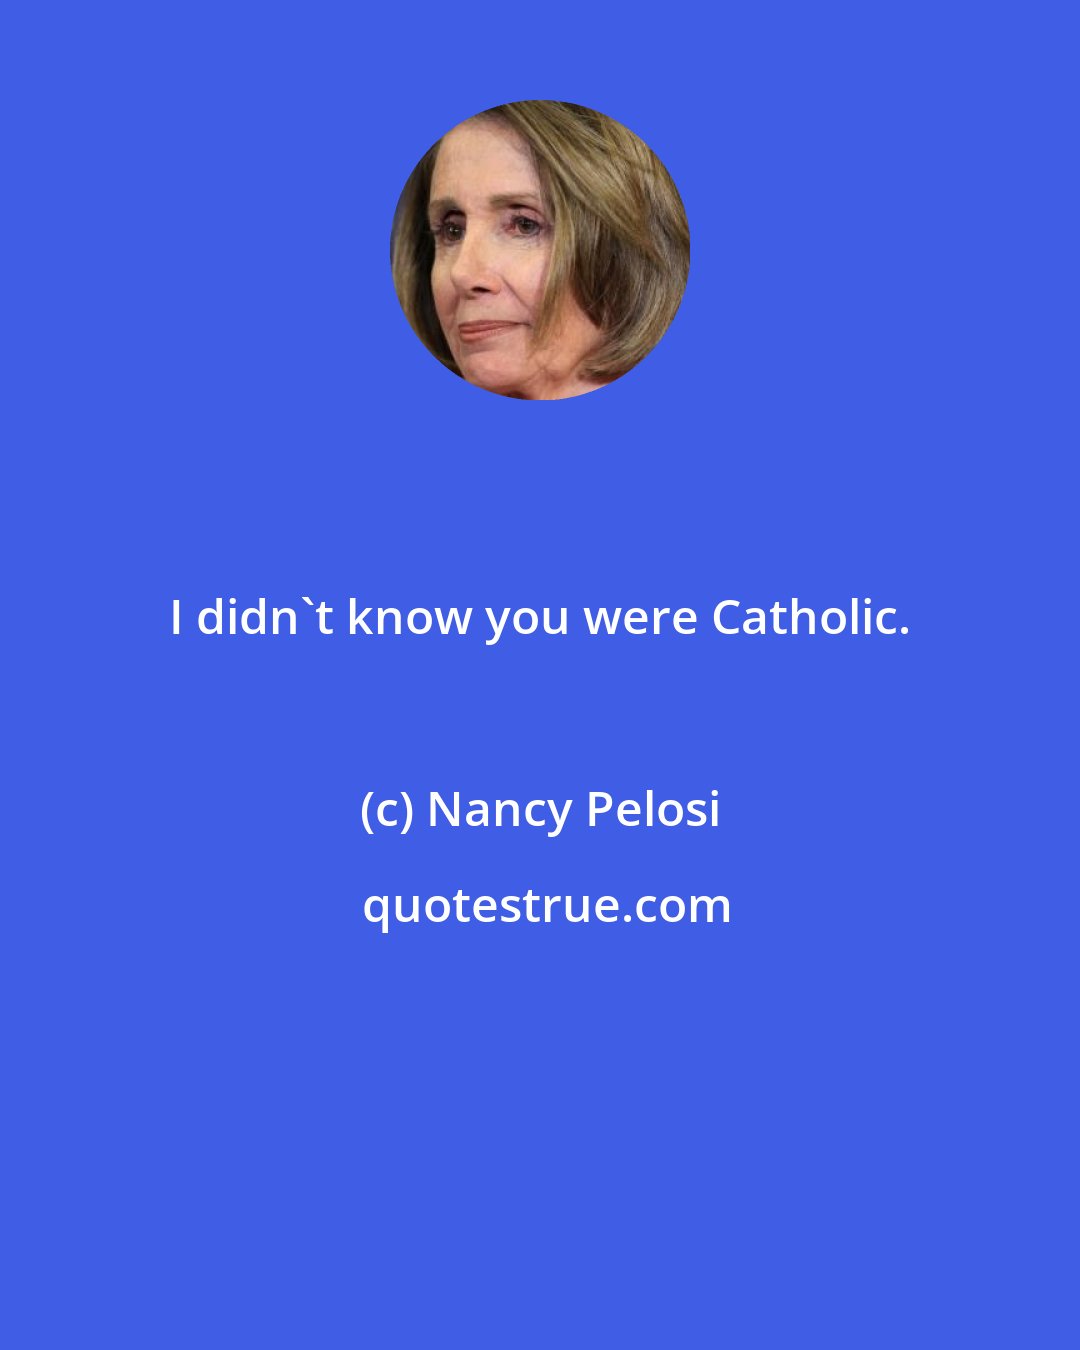 Nancy Pelosi: I didn't know you were Catholic.